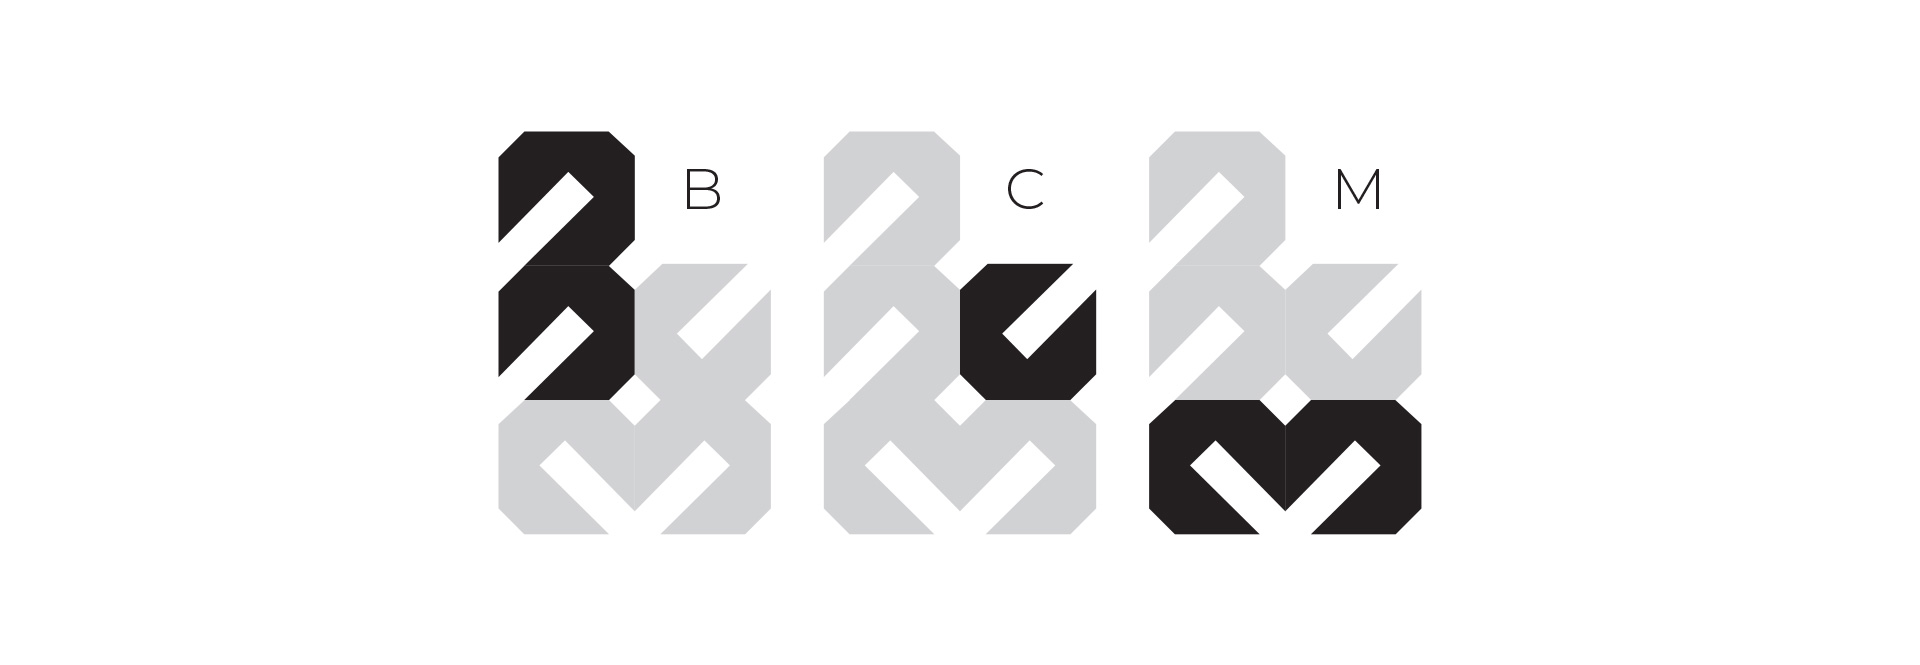 Bcm Logo Construction Rotorua Envy Web And Design